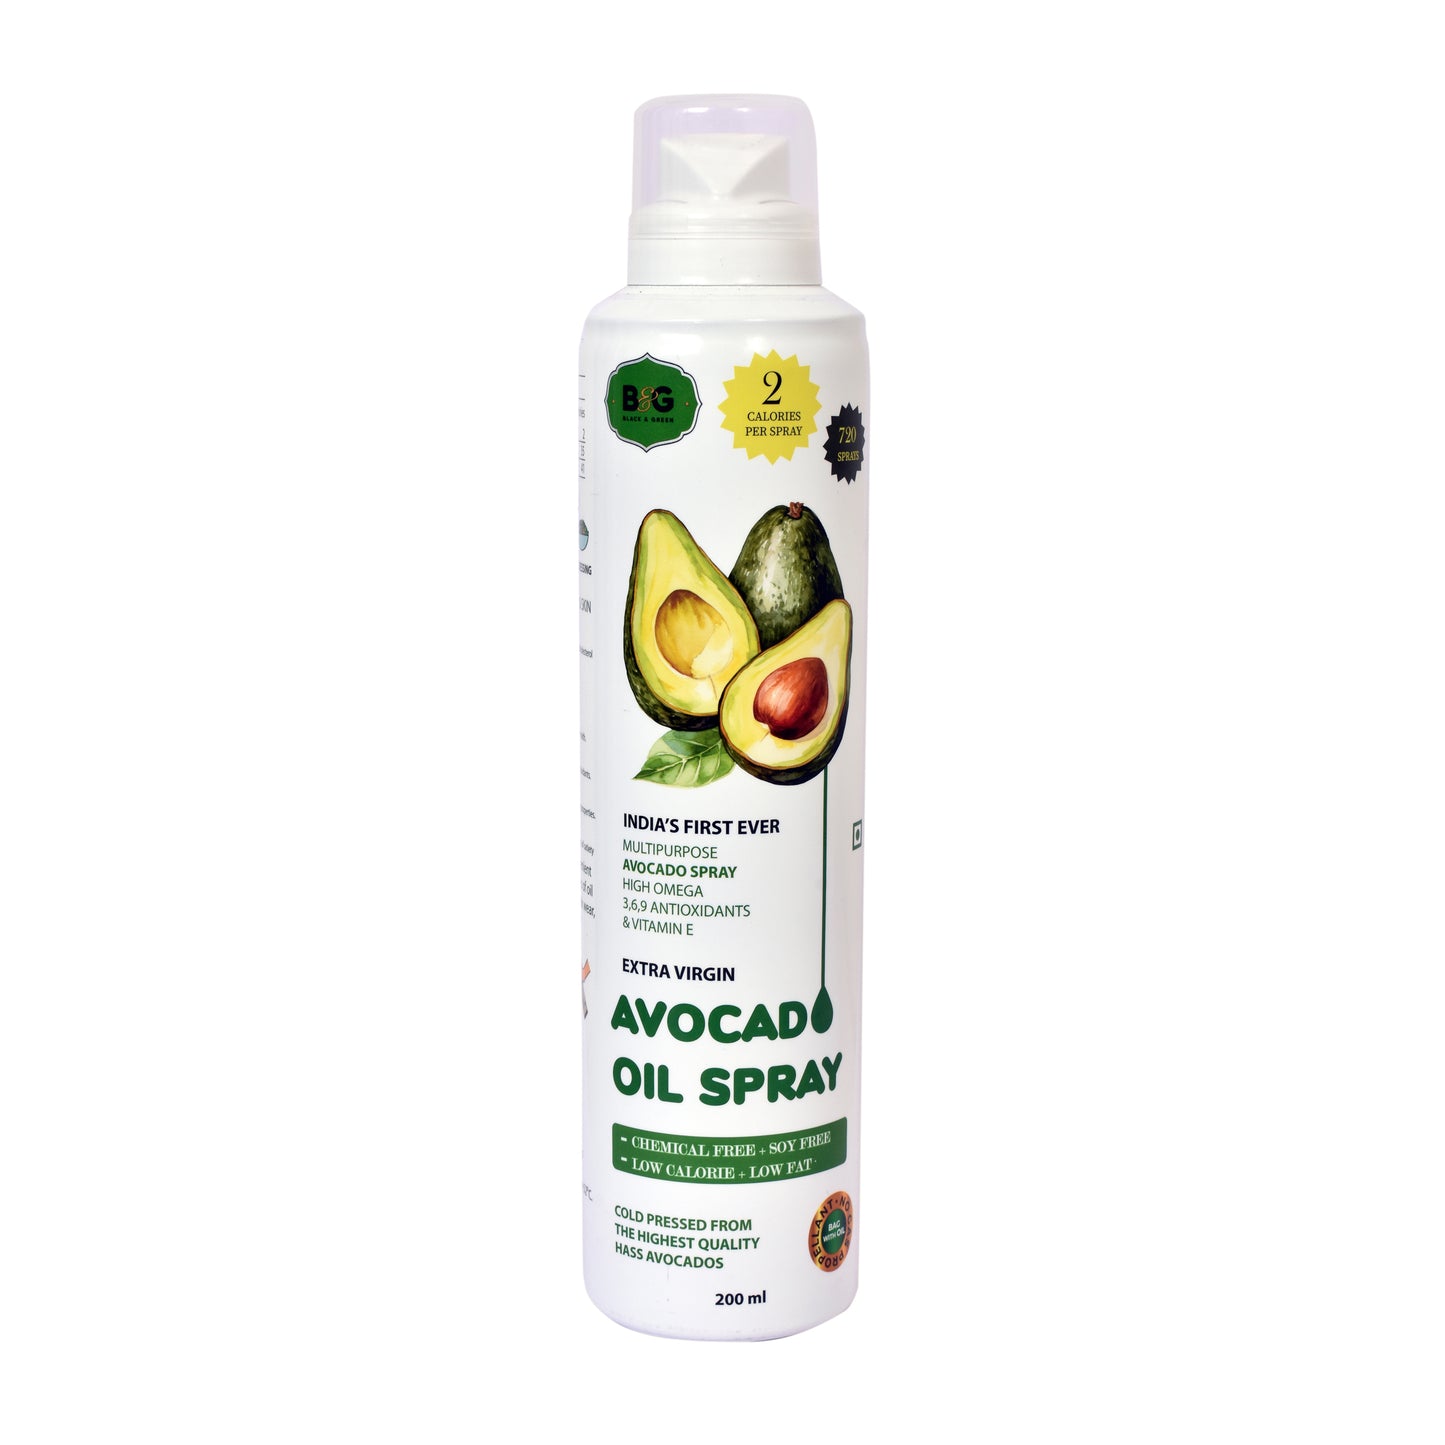 Extra Virgin Avocado Spray Oil